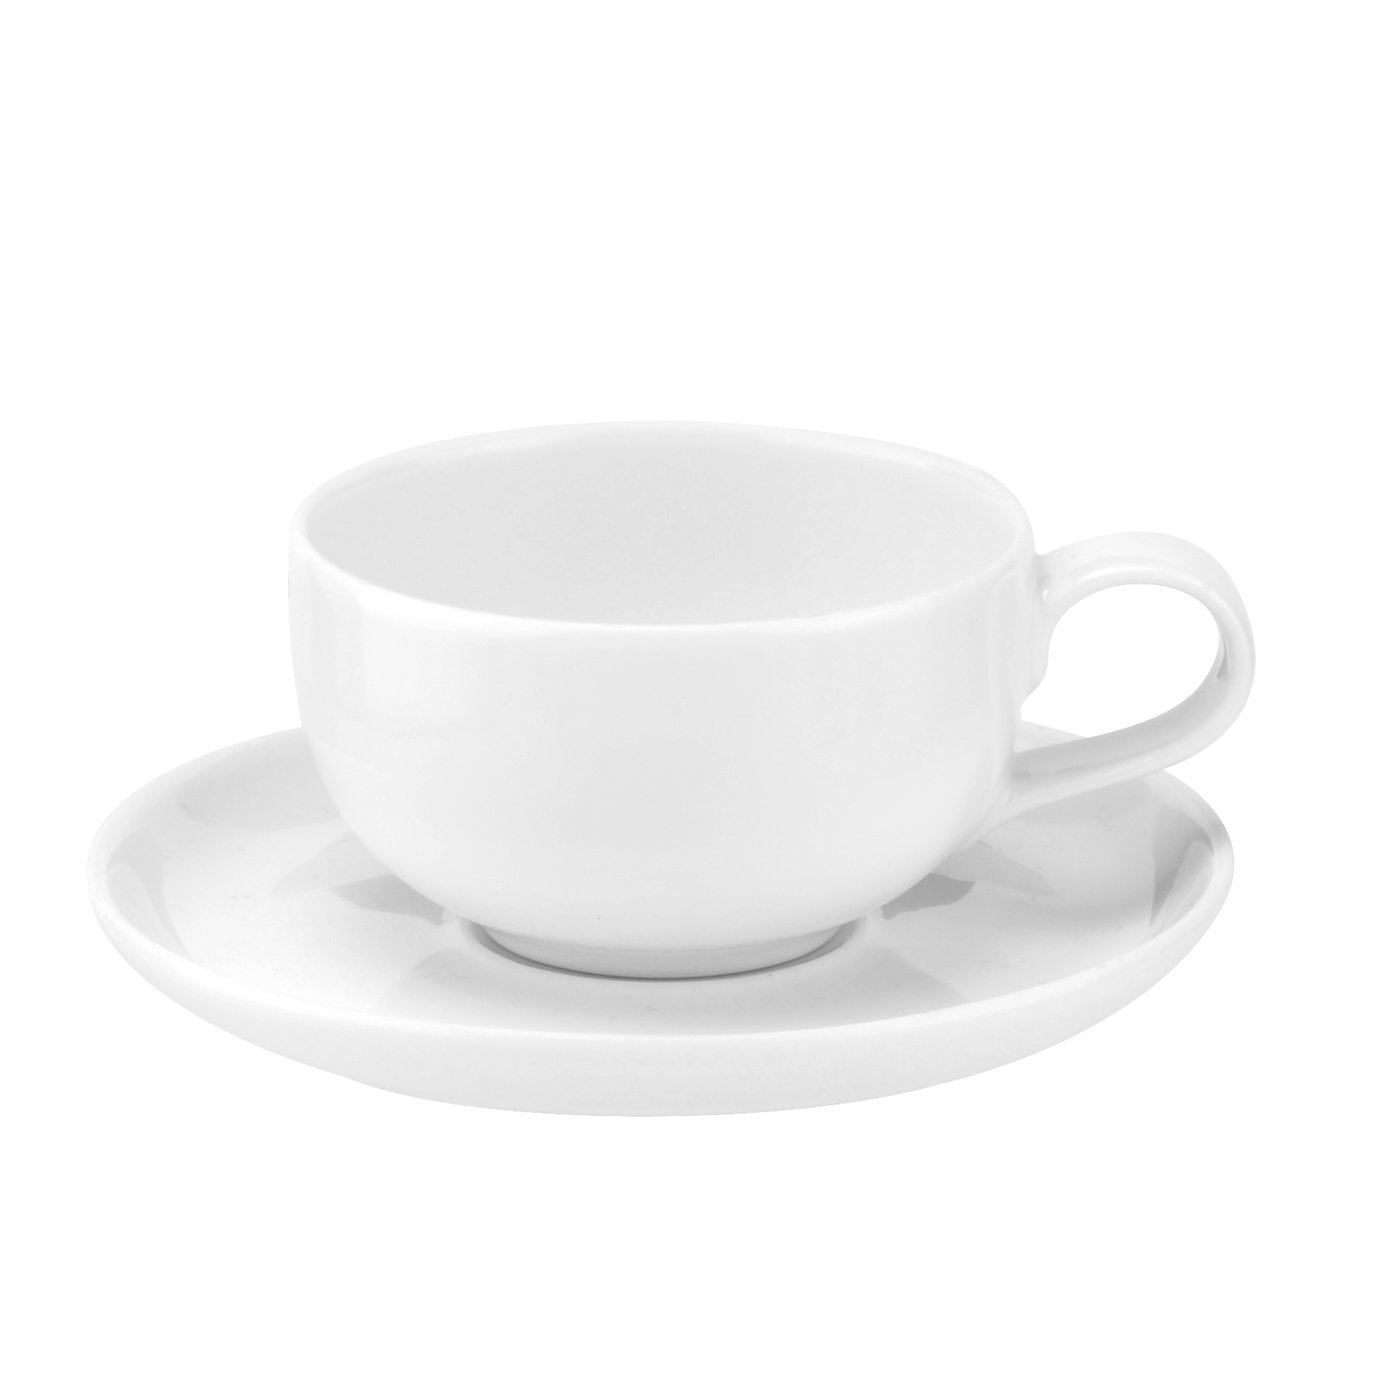 Portmeirion Choices Cup & Saucer 3.6oz White 